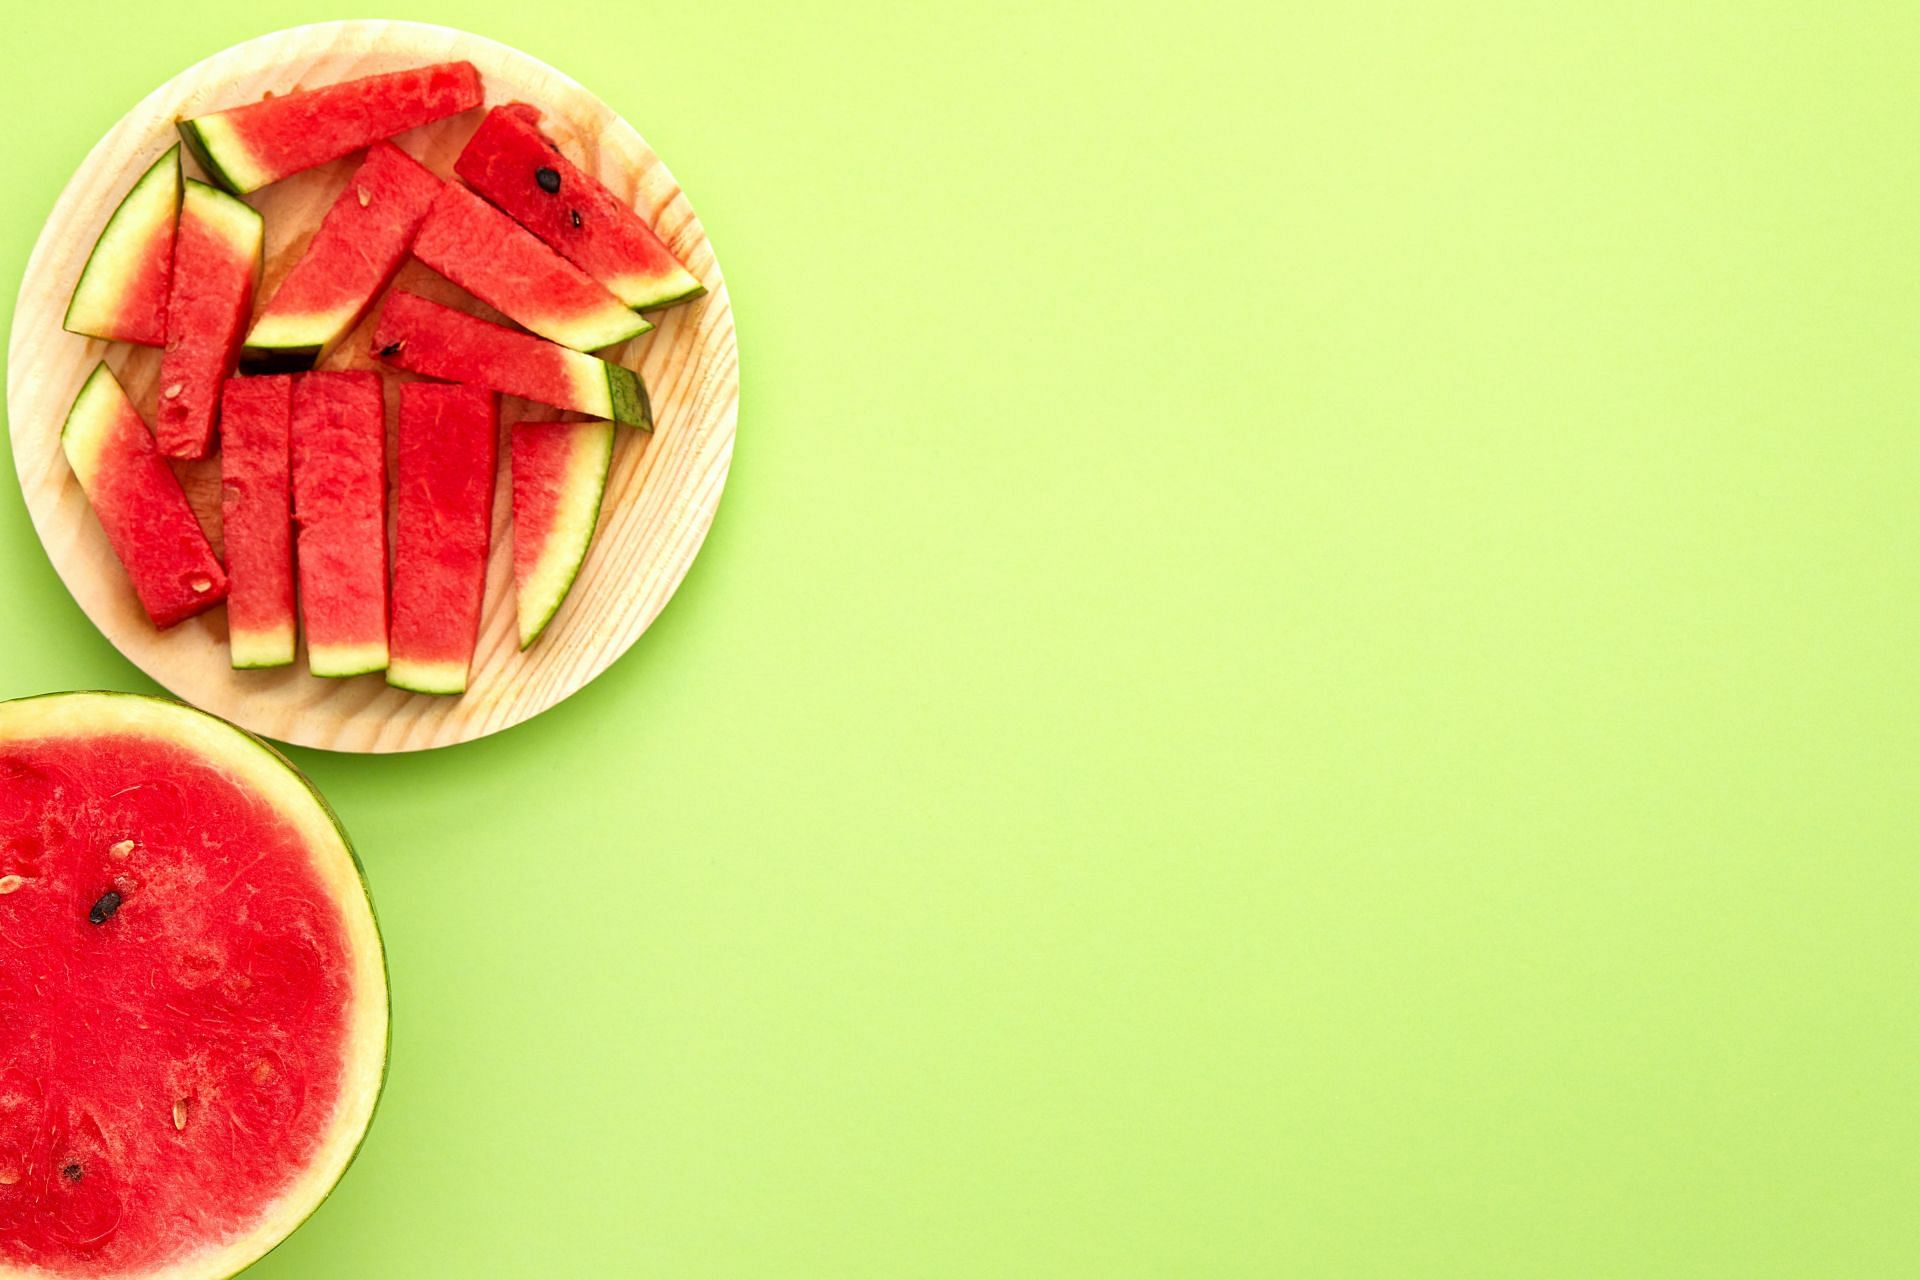 Watermelon for blood pressure (Image via Pexels/Pixelme Stock Photography)